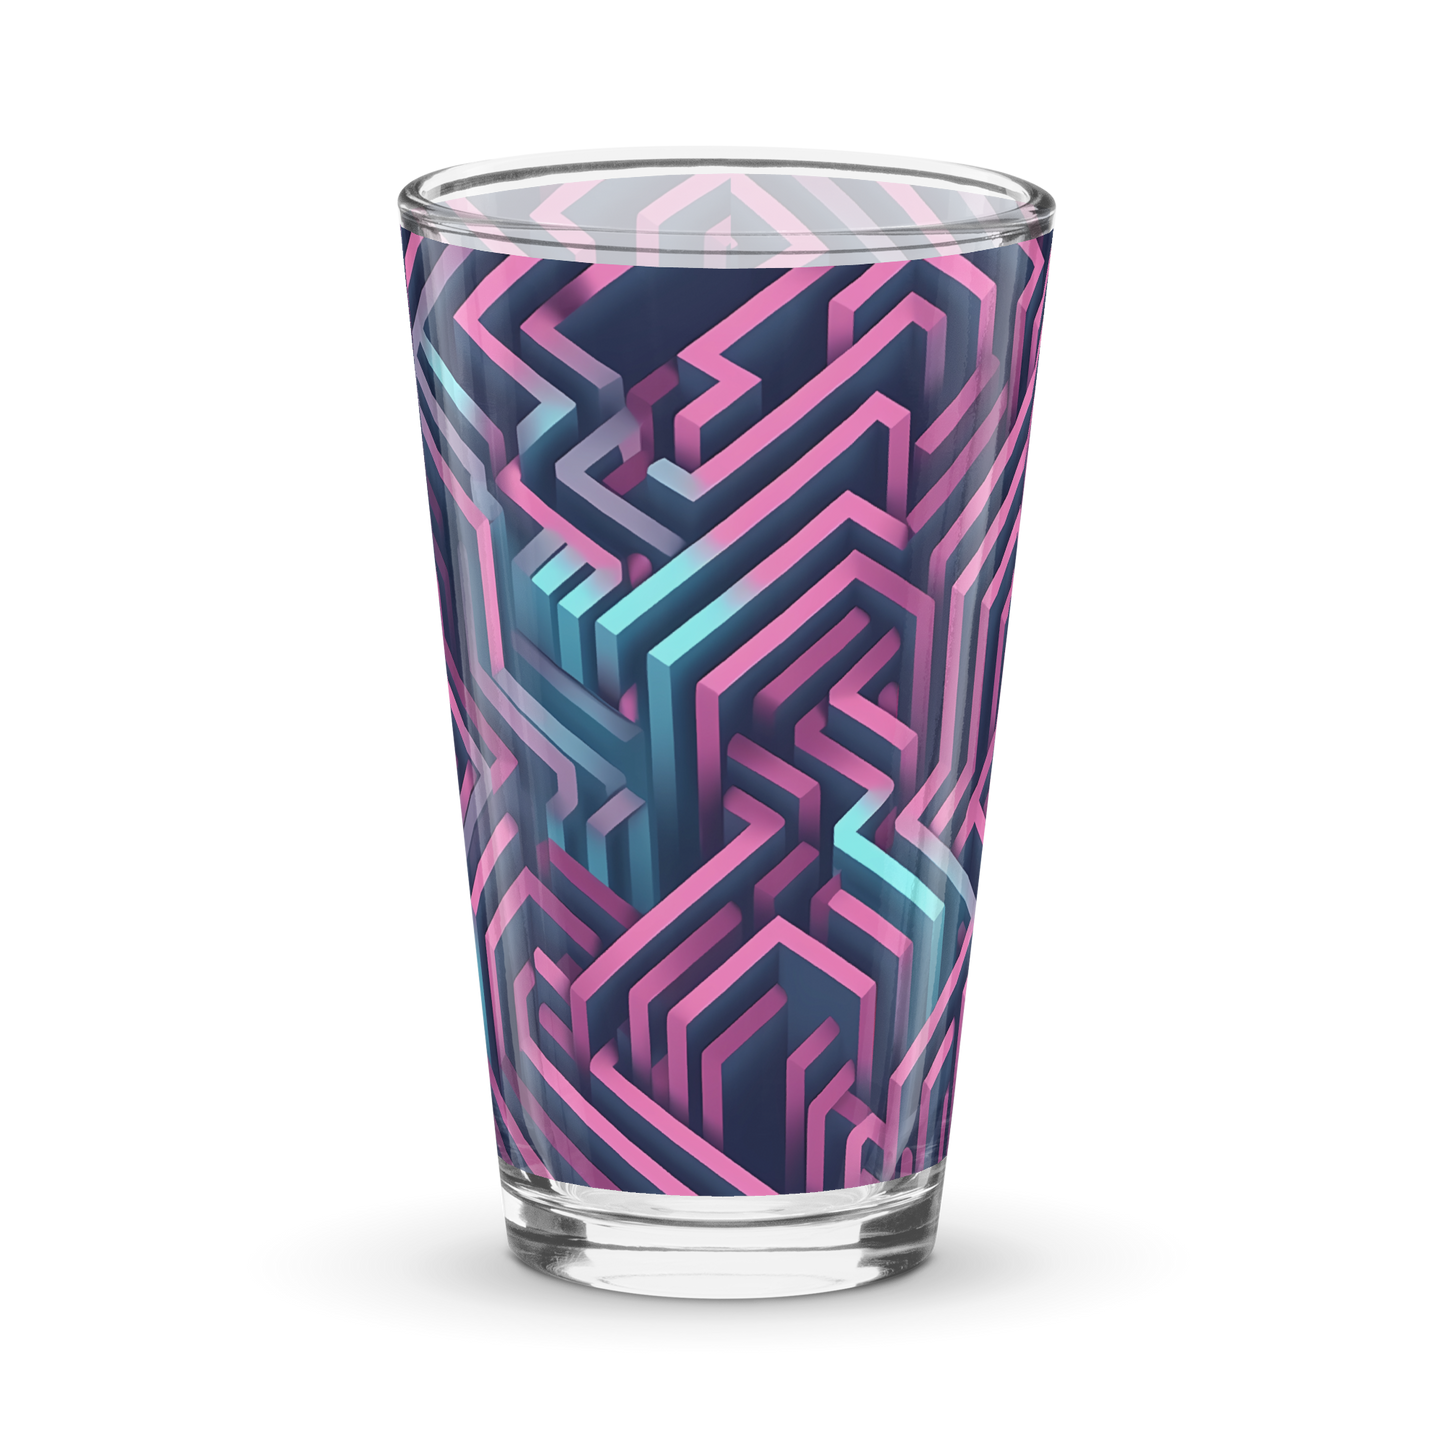 3D Maze Illusion | 3D Patterns | Shaker Pint Glass (16 oz) - #4